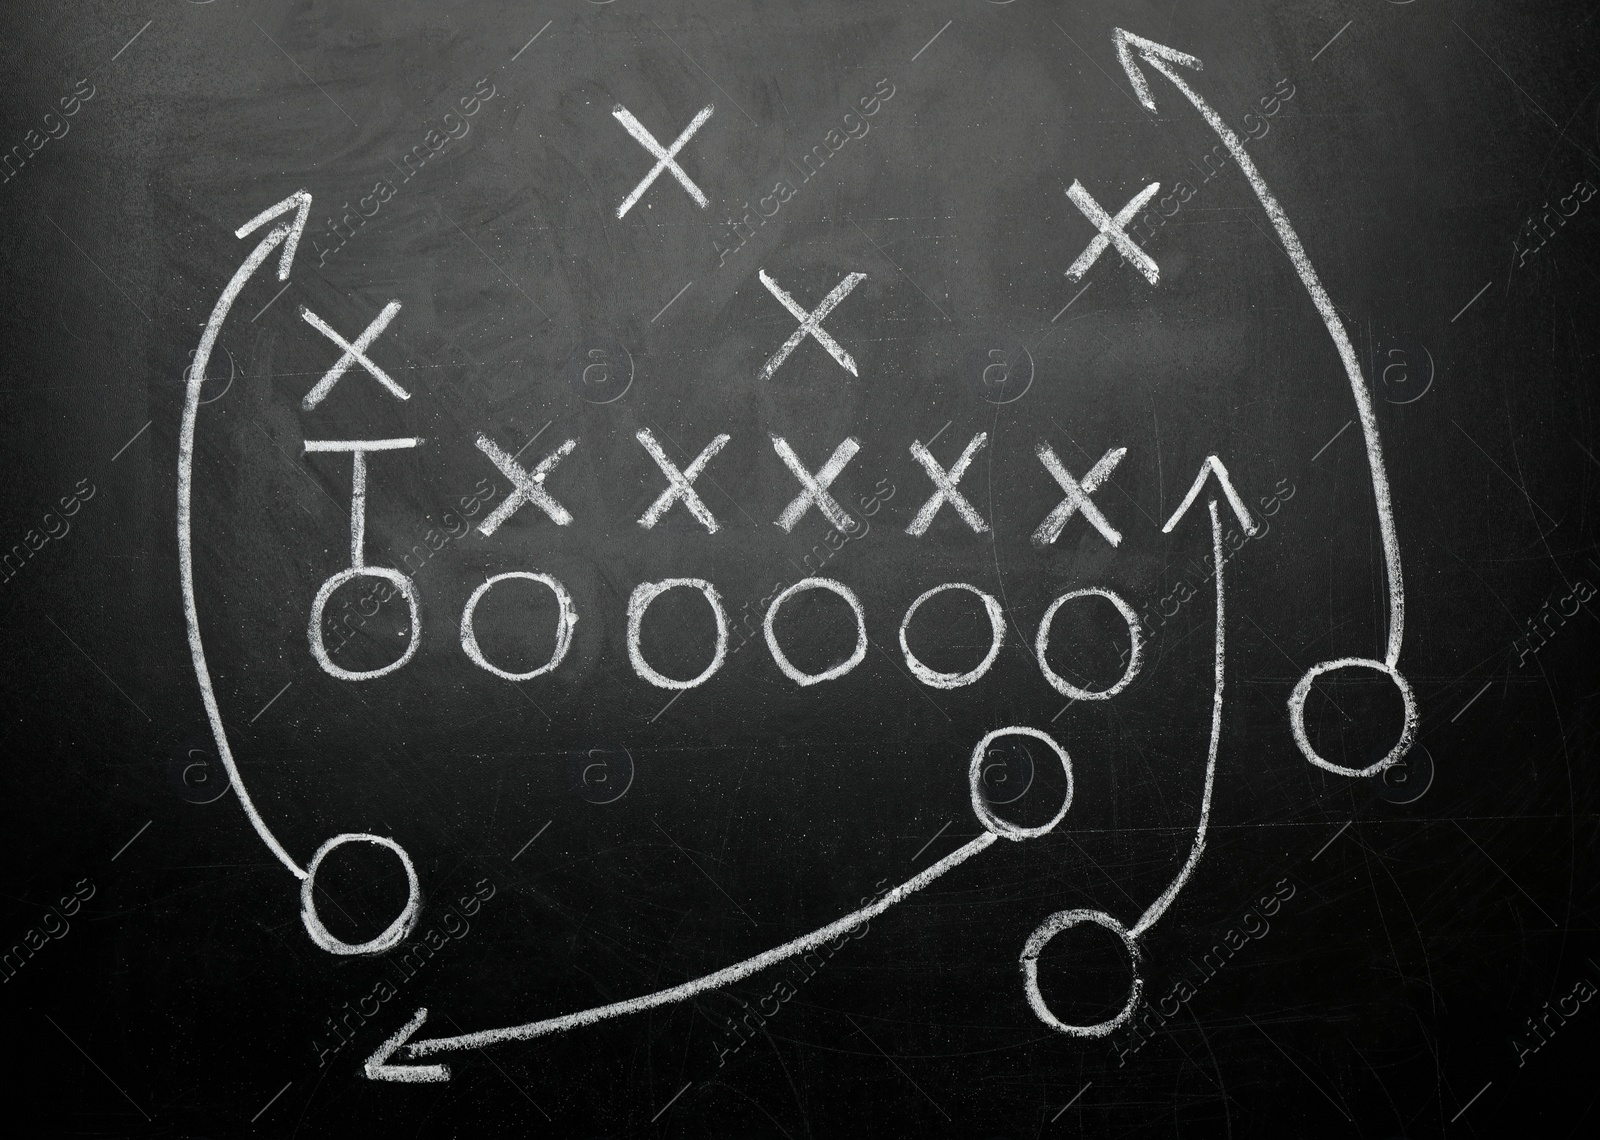 Photo of Football game strategy drawn on black chalkboard